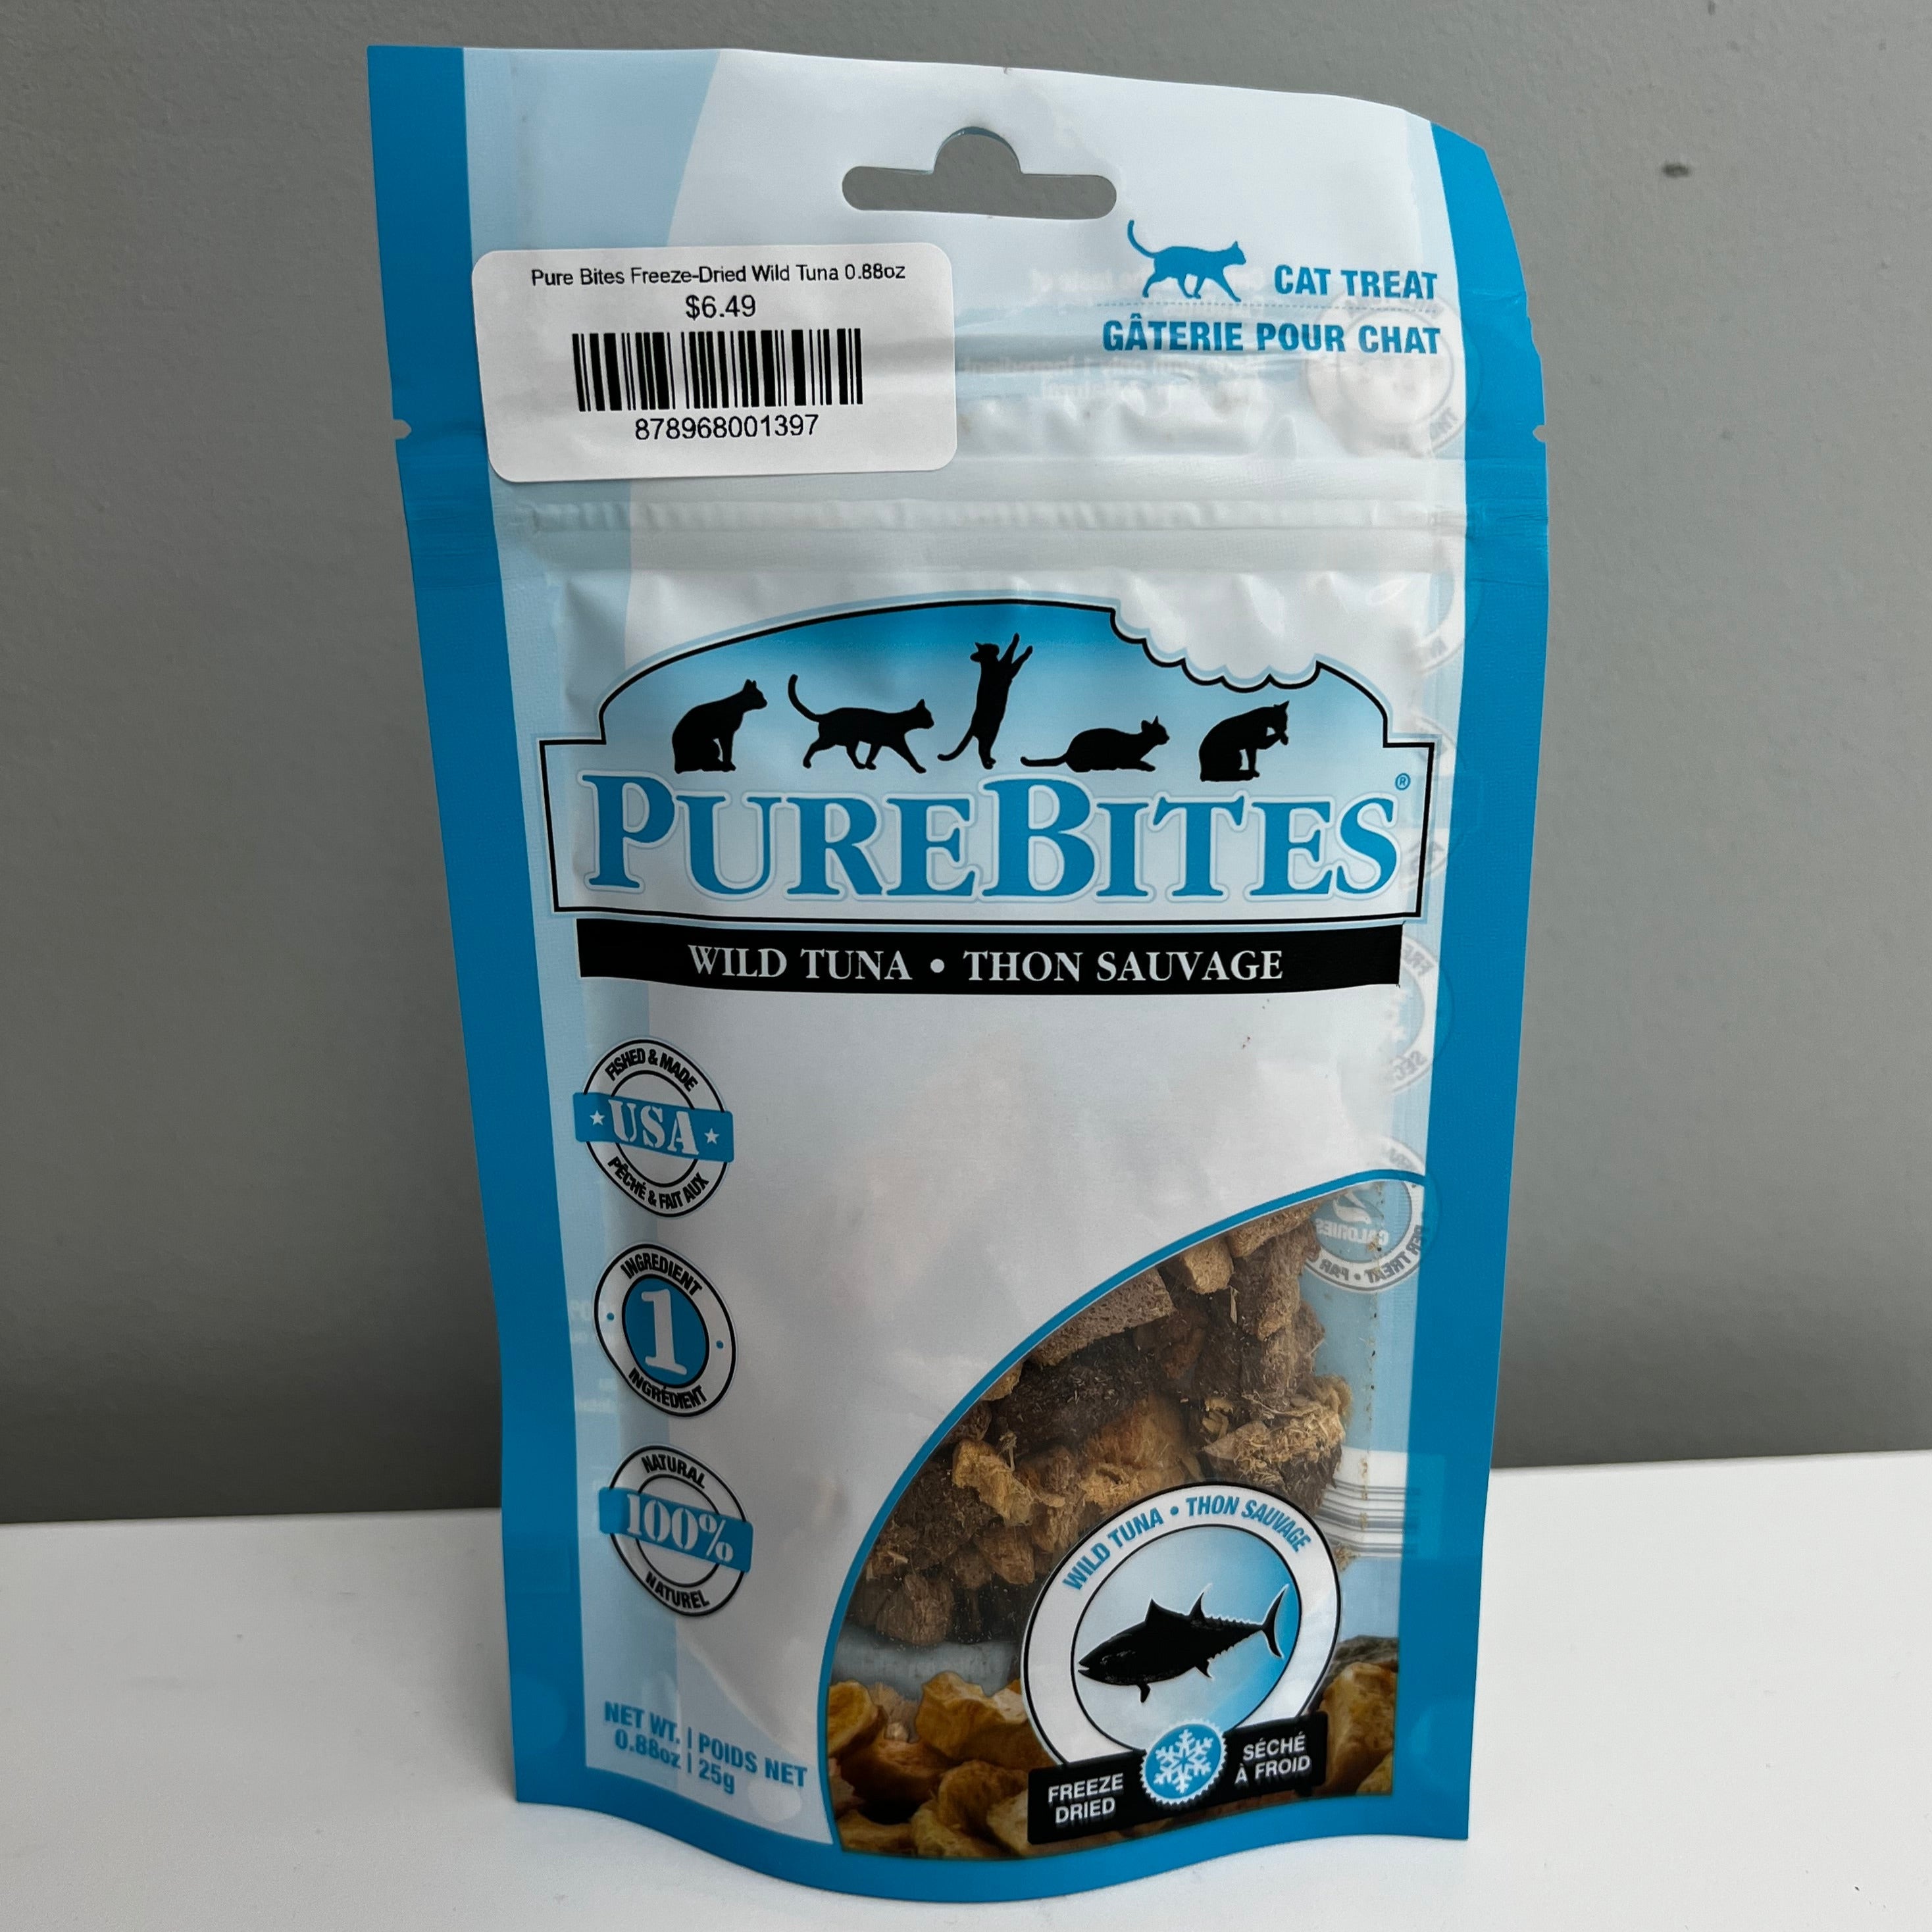 PureBites Freeze Dried Minnow Cat Treats - 2.3 oz